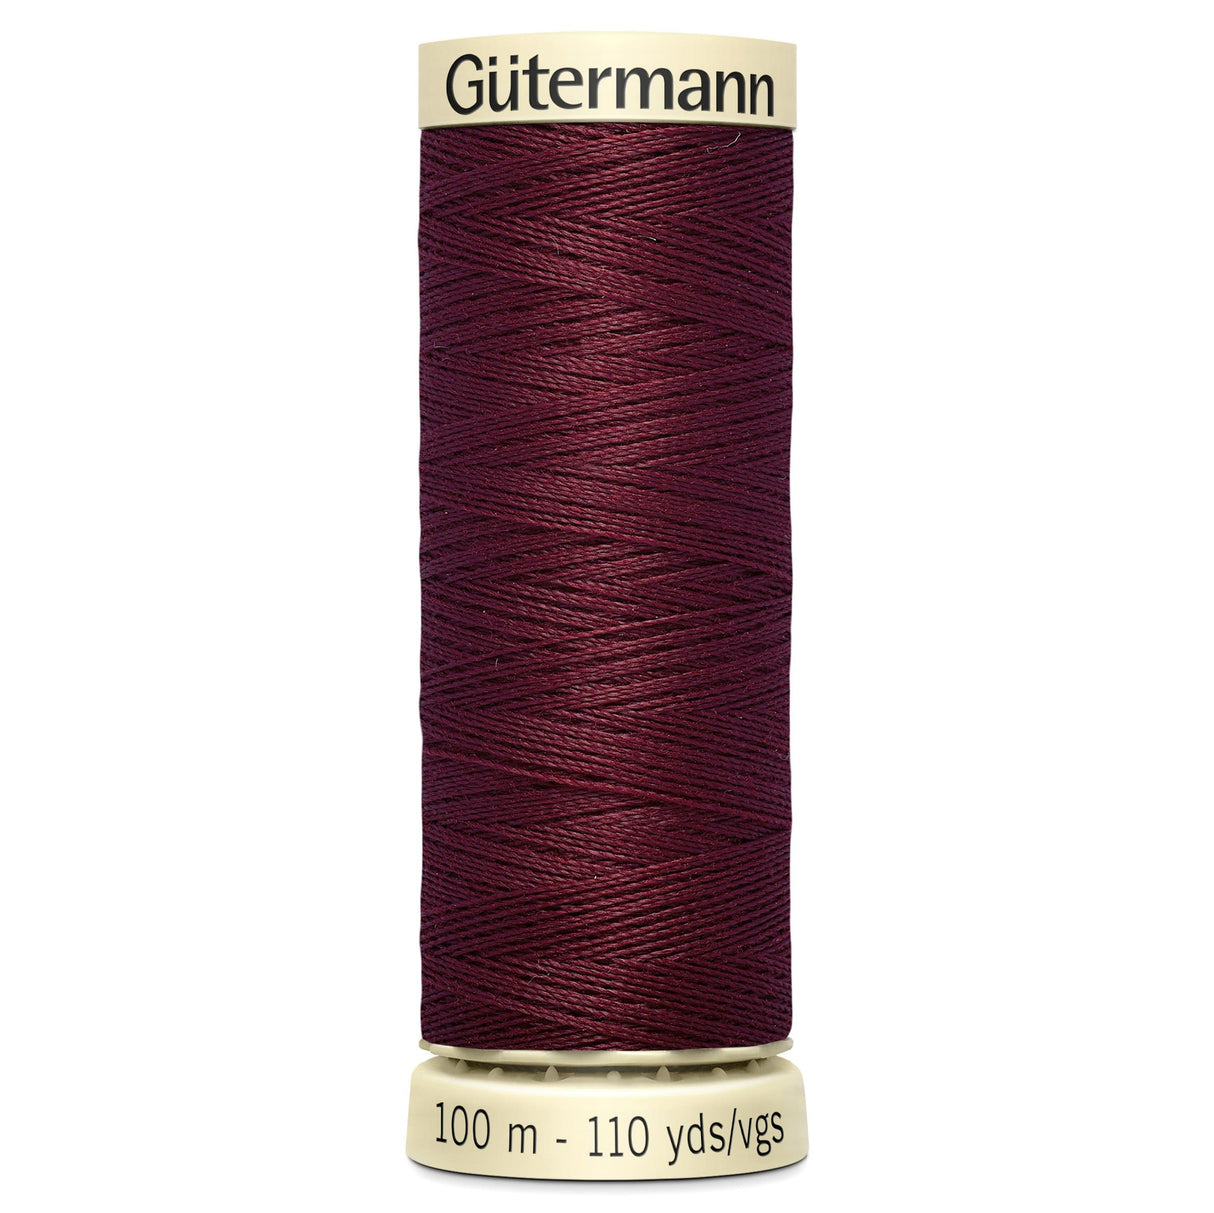 Groves Haberdashery 369 Gutermann Thread Sewing Cotton 100 m Black to Pink